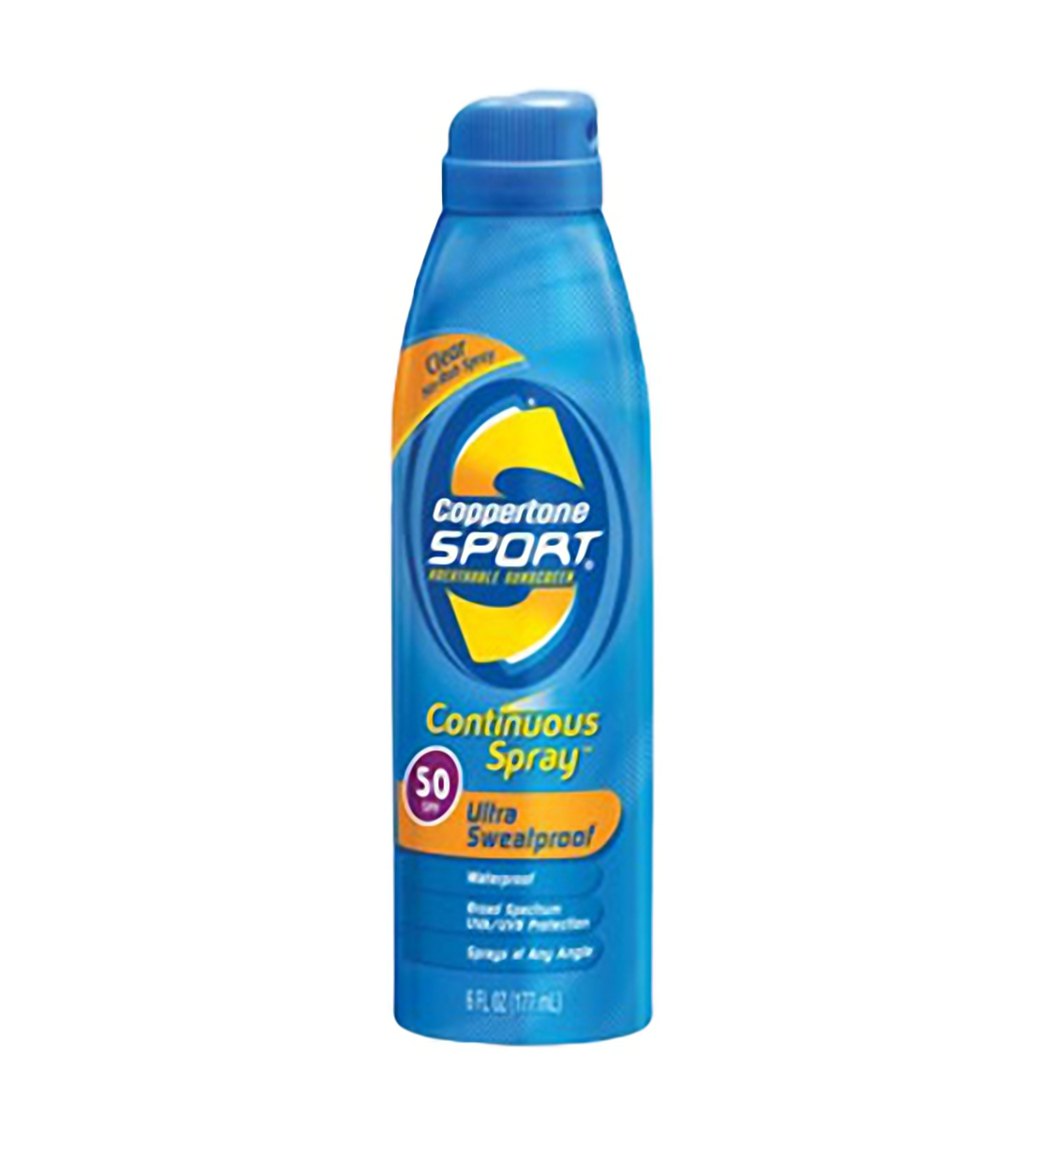 Coppertone Sport Continuous Spray Clear Spf 50 - Swimoutlet.com